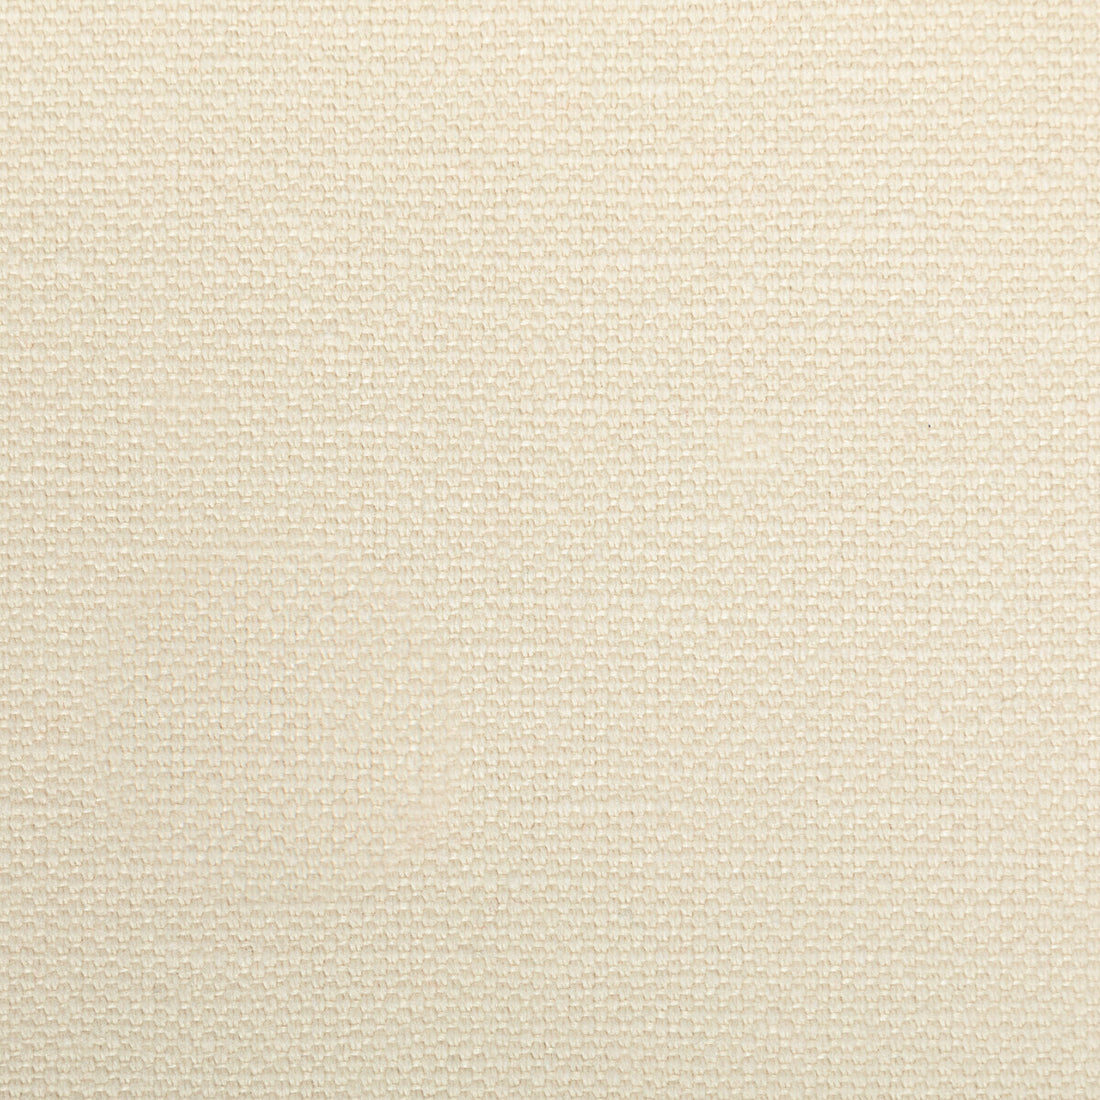 Carson fabric in latte color - pattern 36282.161.0 - by Kravet Basics